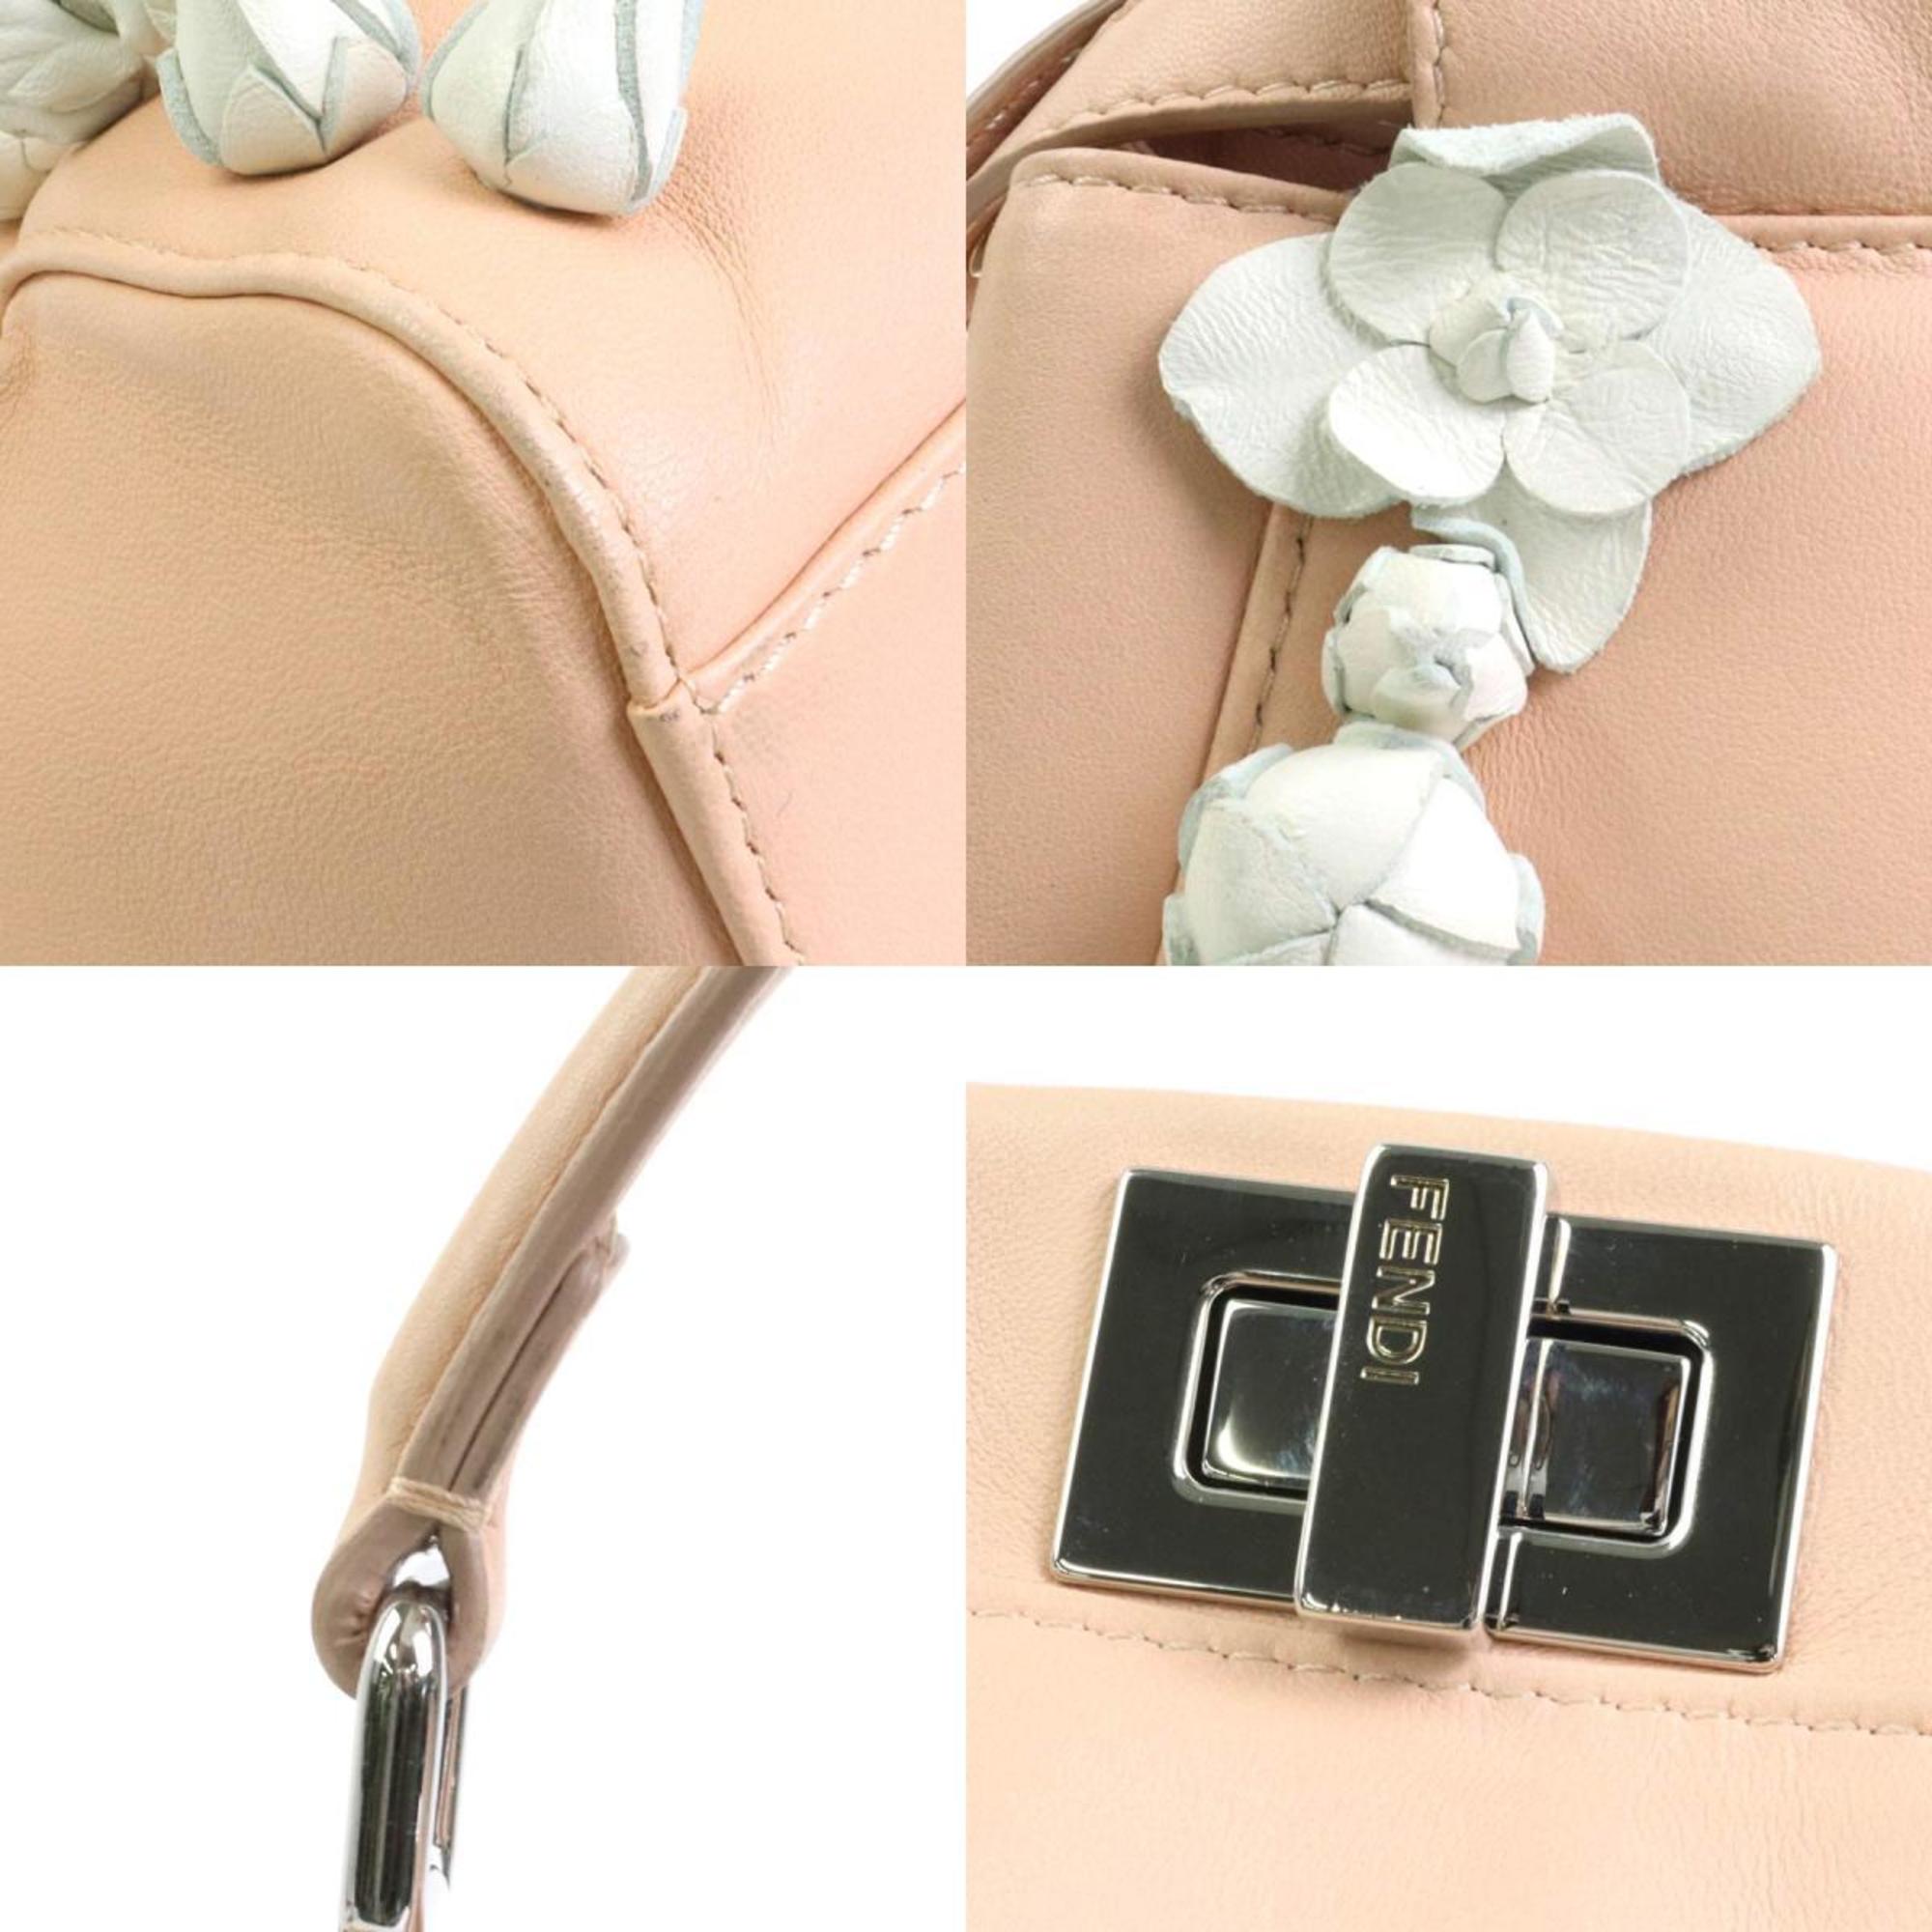 Fendi FENDI Handbag Crossbody Shoulder Bag Mini Peekaboo Leather Pink Beige/White Silver Women's